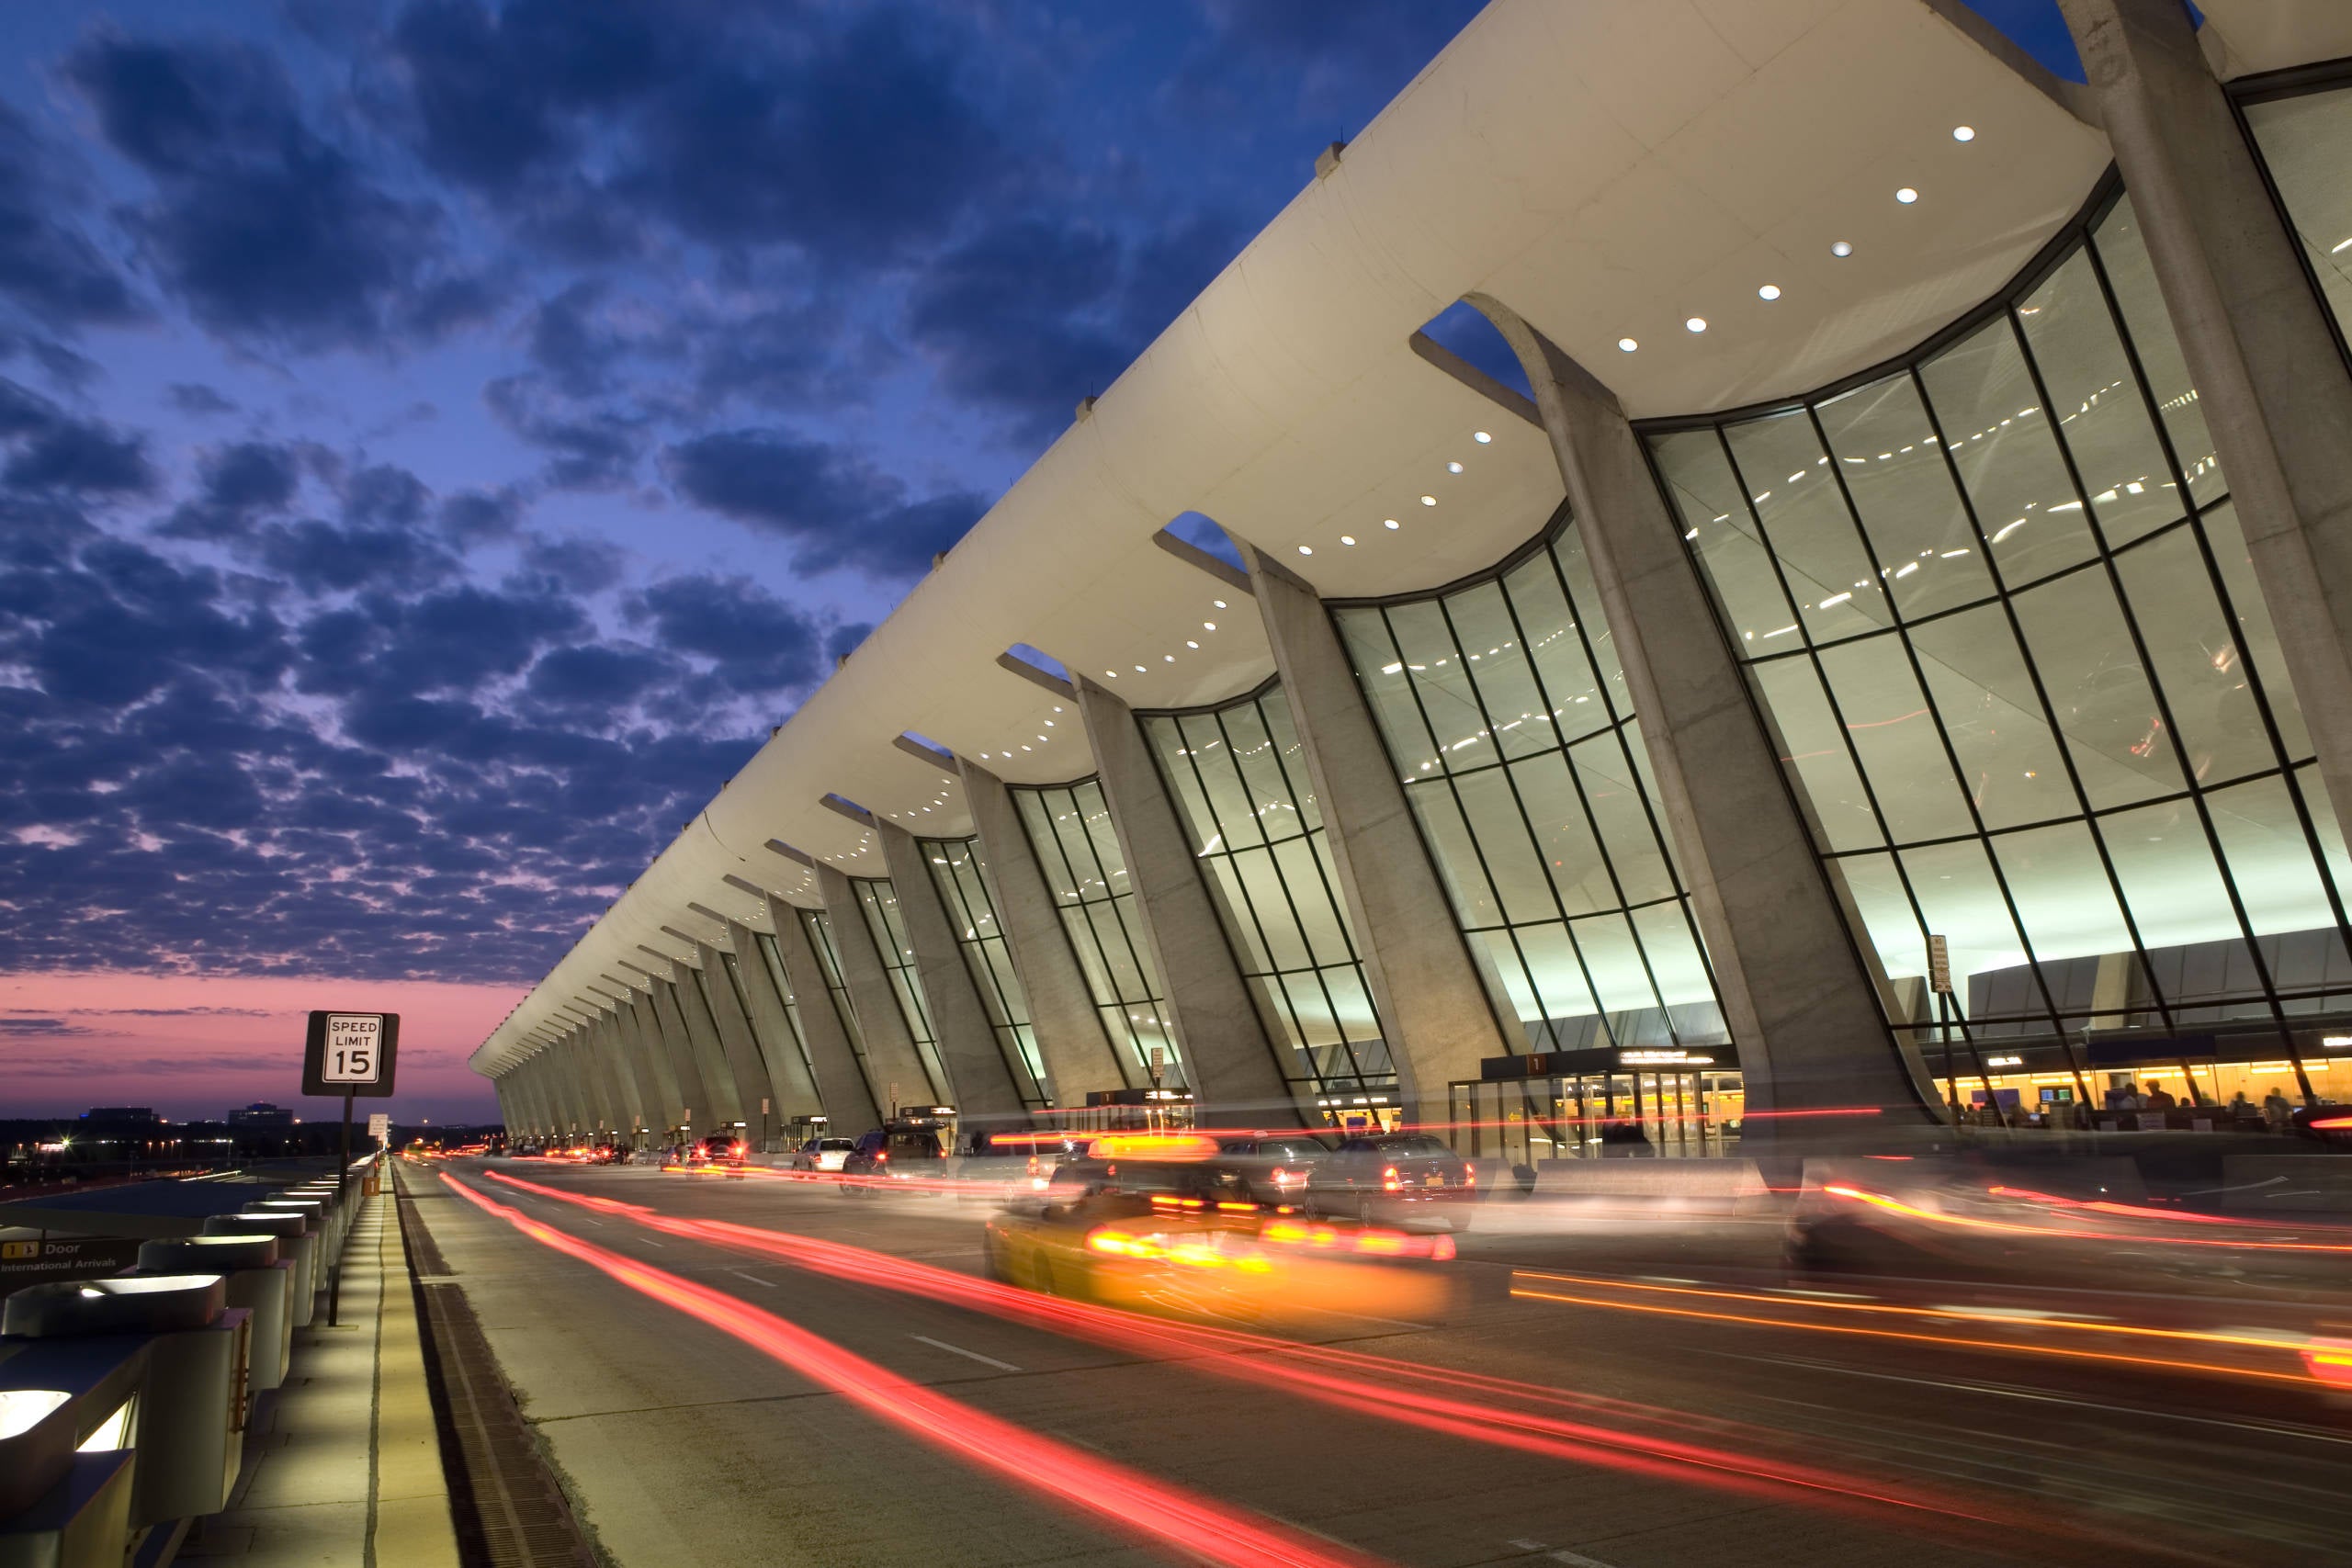 Entrance to Washington Dulles Airport at sunrise